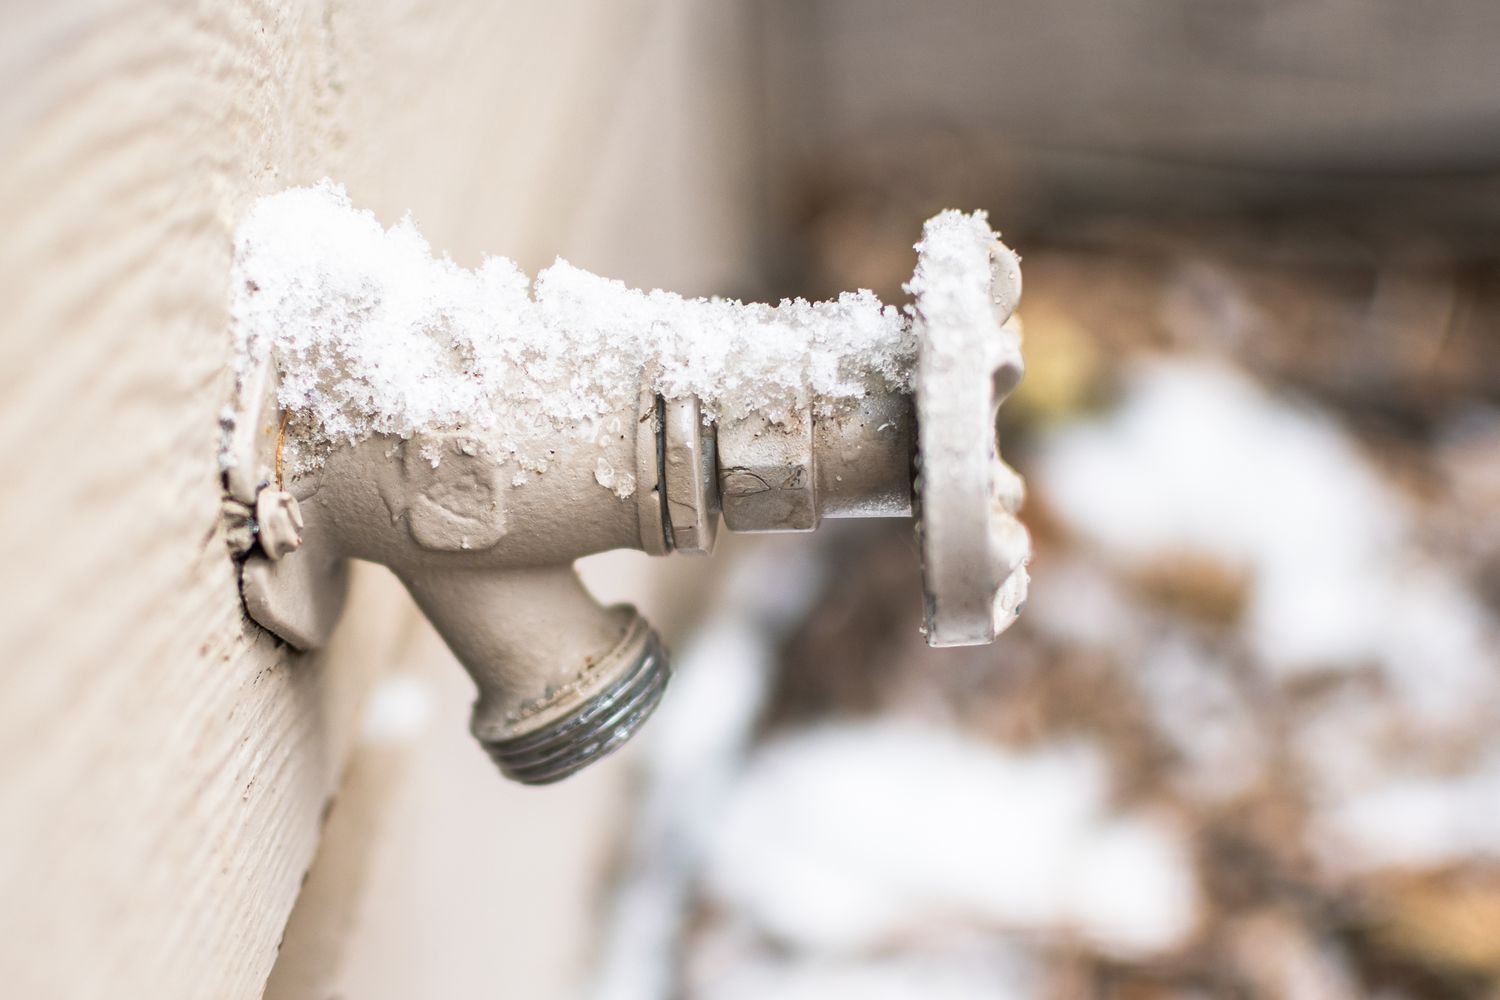 What To Do If Outdoor Spigot Is Frozen